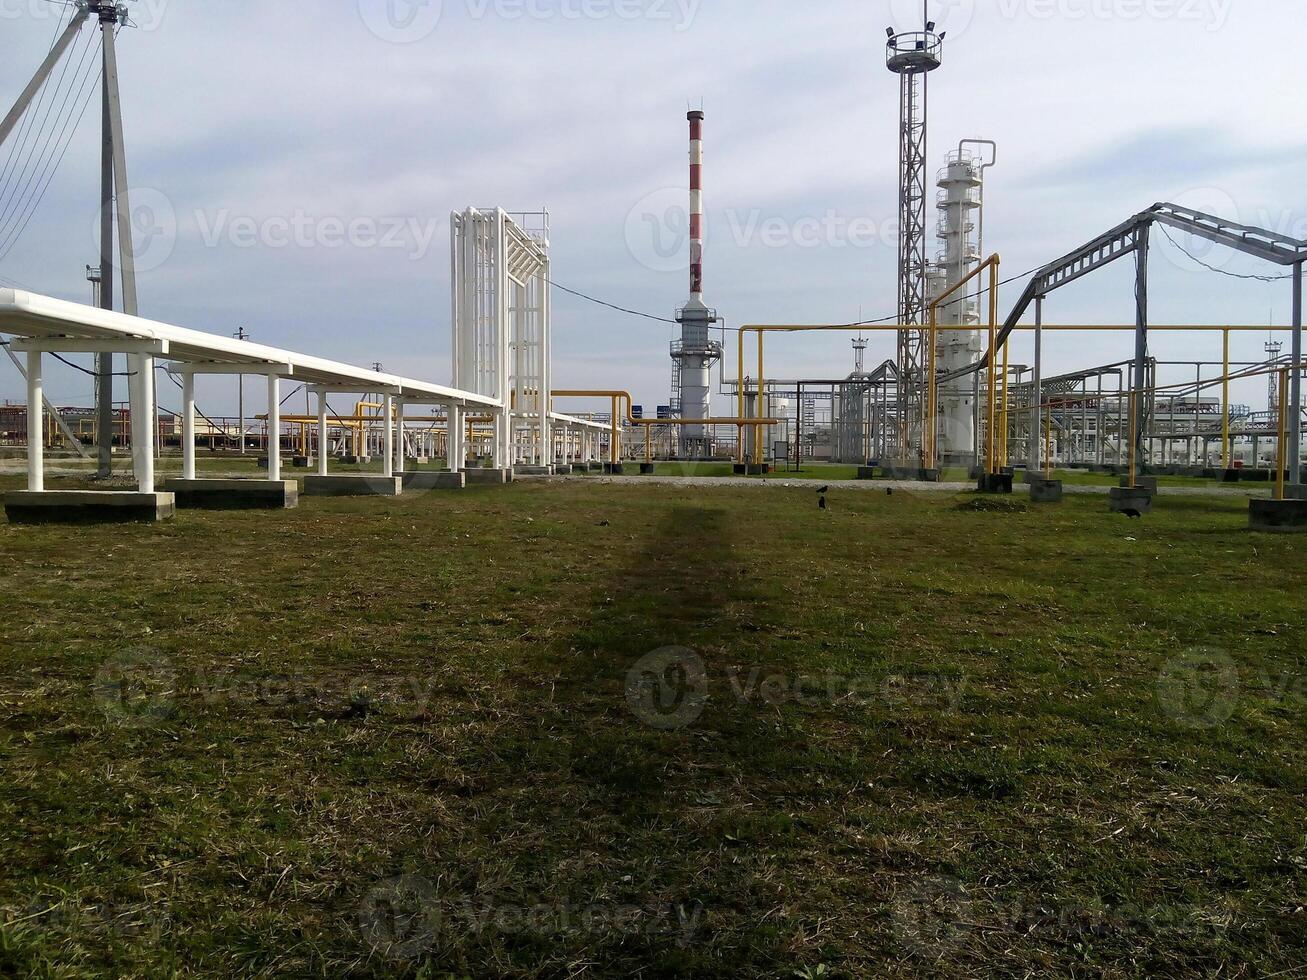 The oil refinery photo